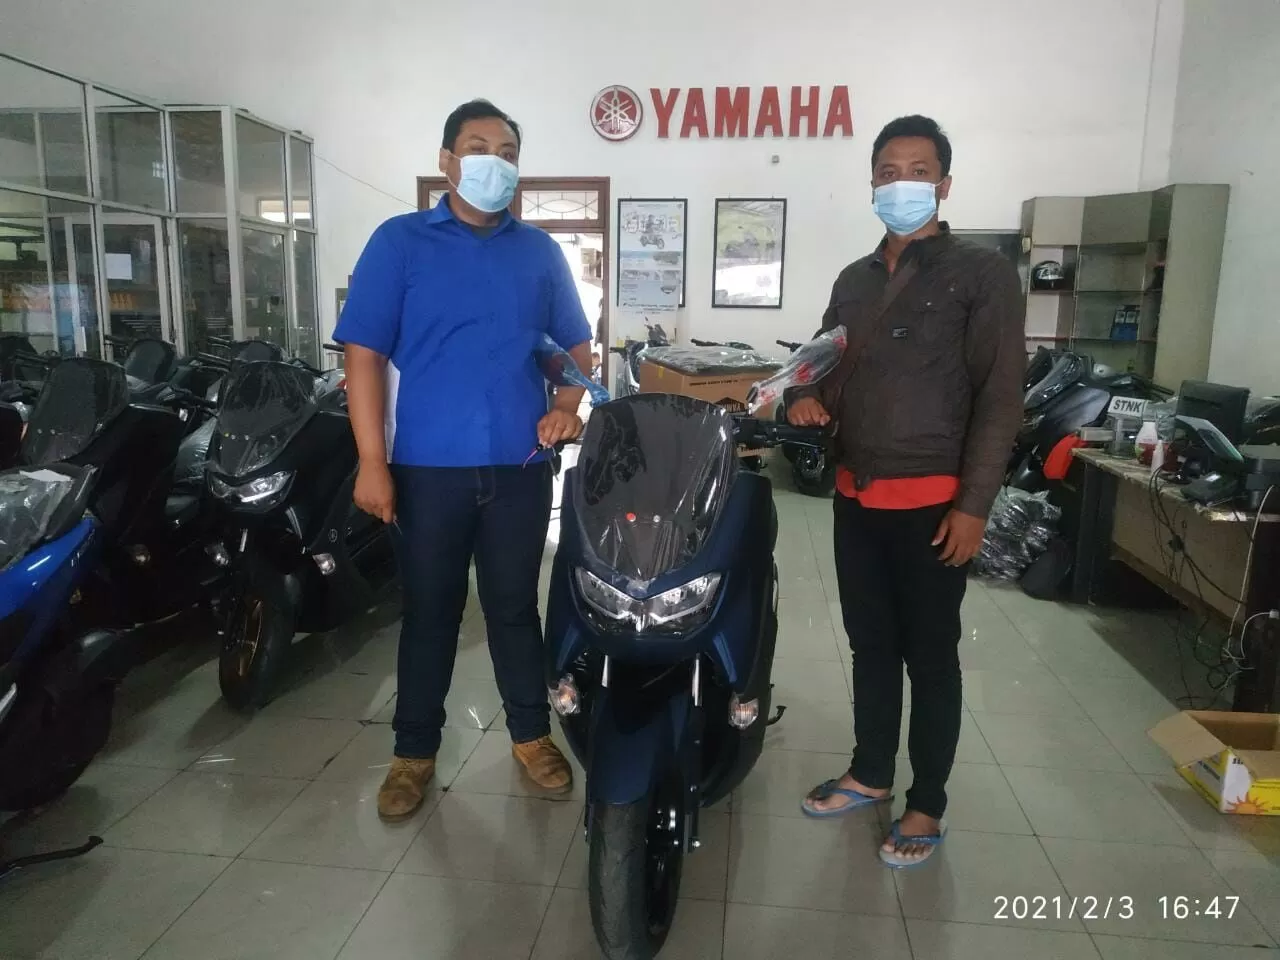 Testimoni pembelian unit motor Motor Yamaha Sidoarjo Webportal Marketing Sepeda Motor Indonesia